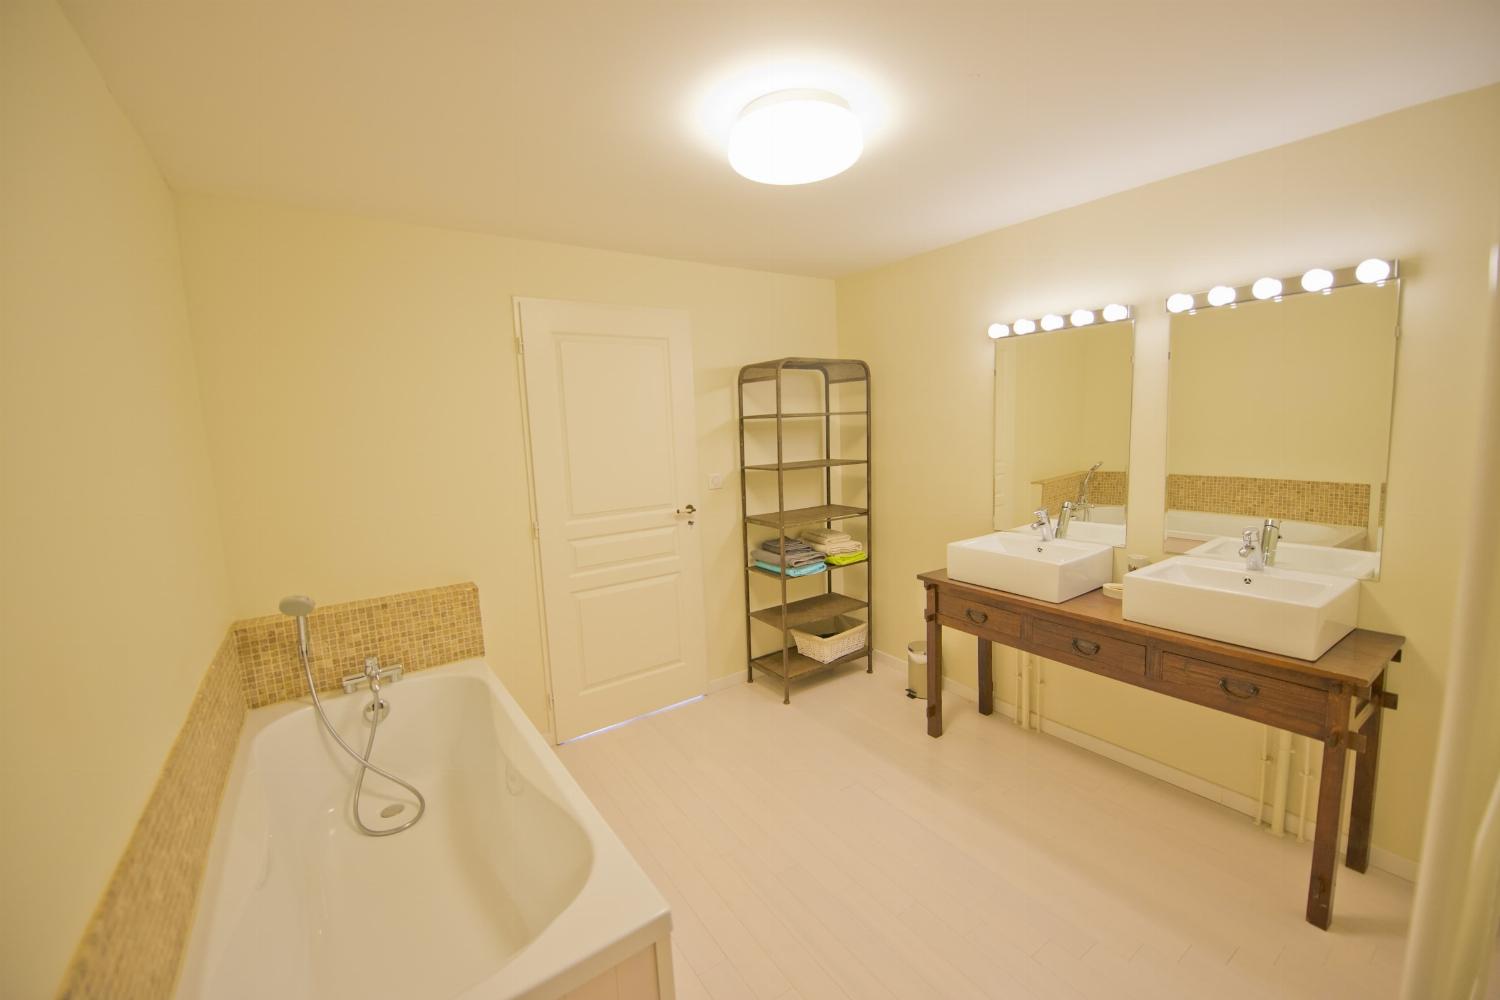 Bathroom | Rental accommodation in Charente